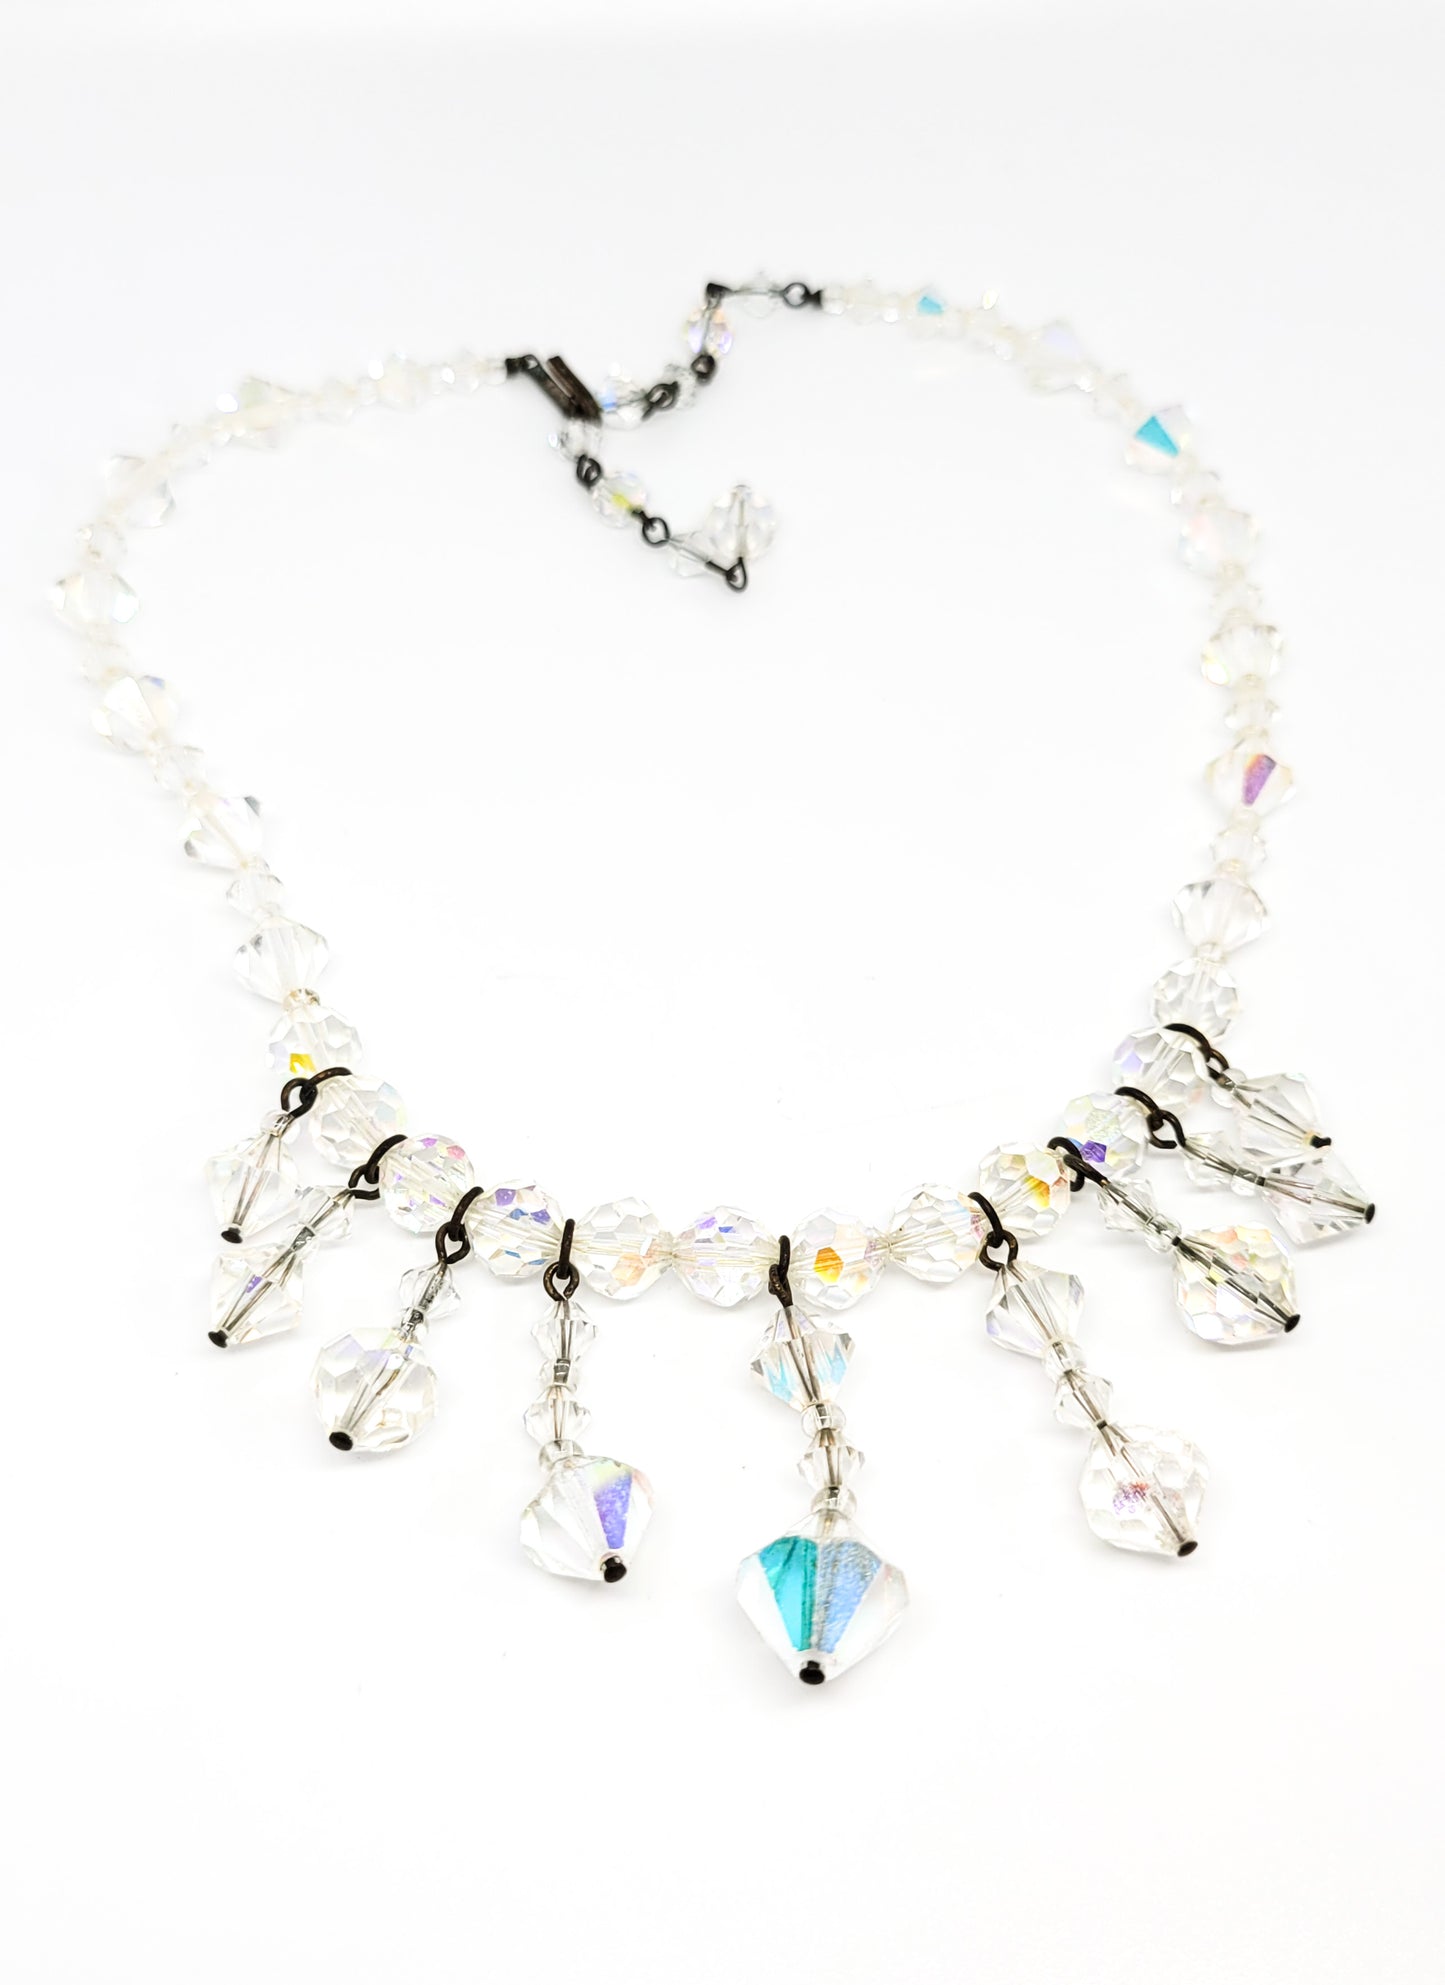 Waterfall Austrian crystal rainbow aurora borealis vintage bib necklace